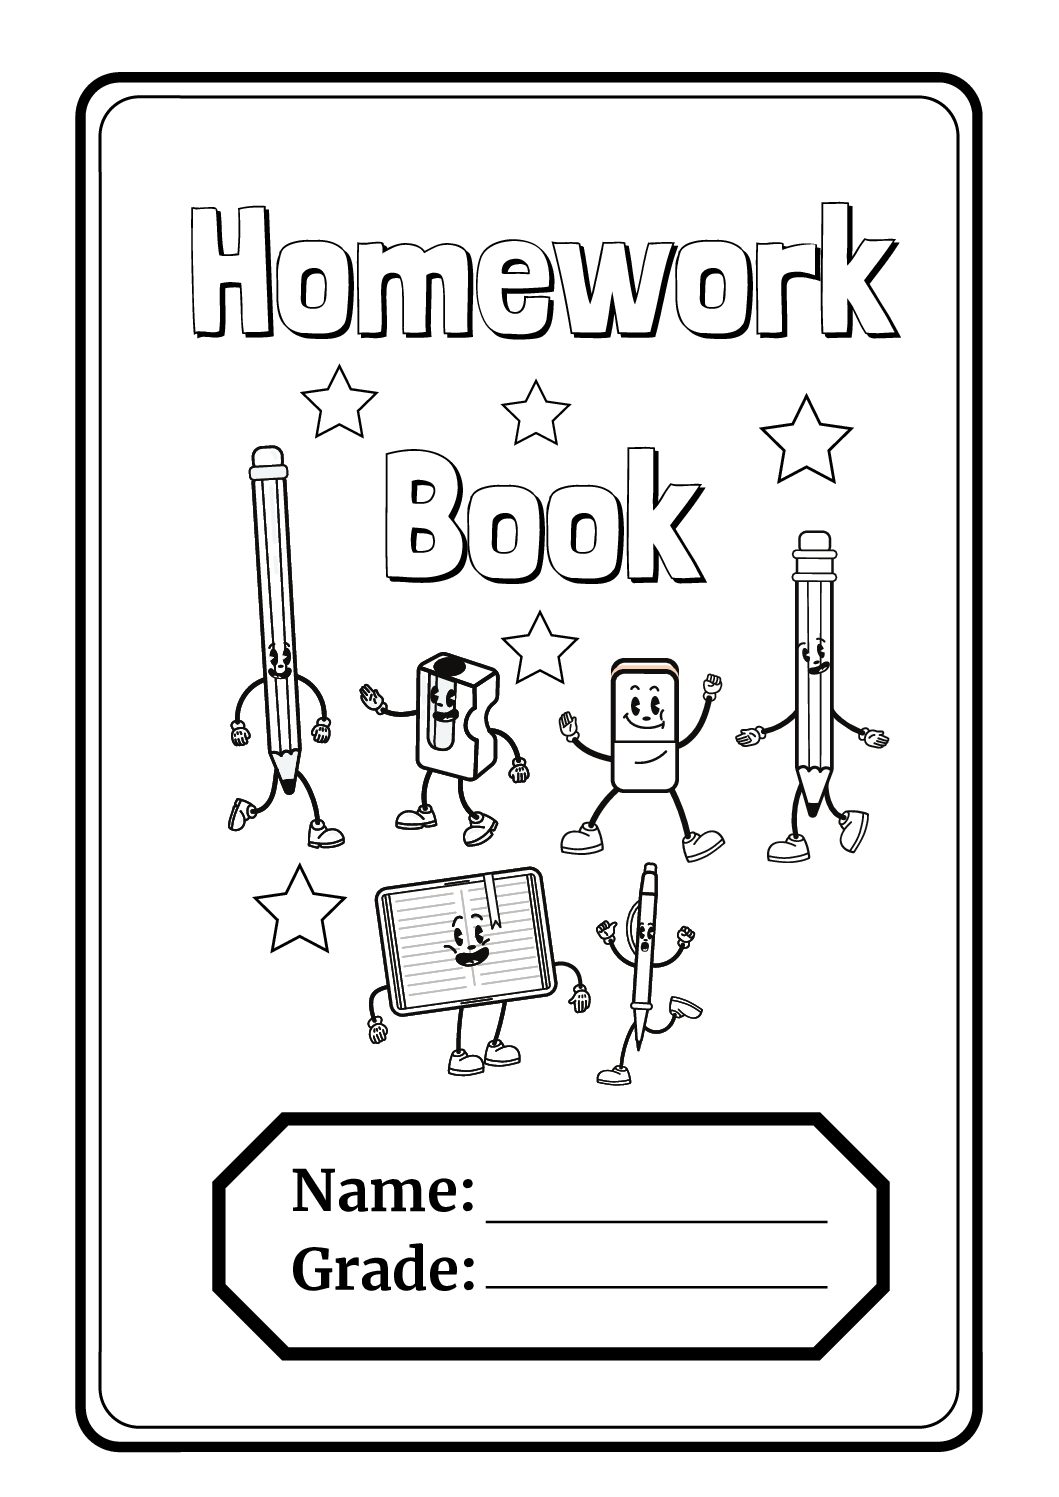 english homework design